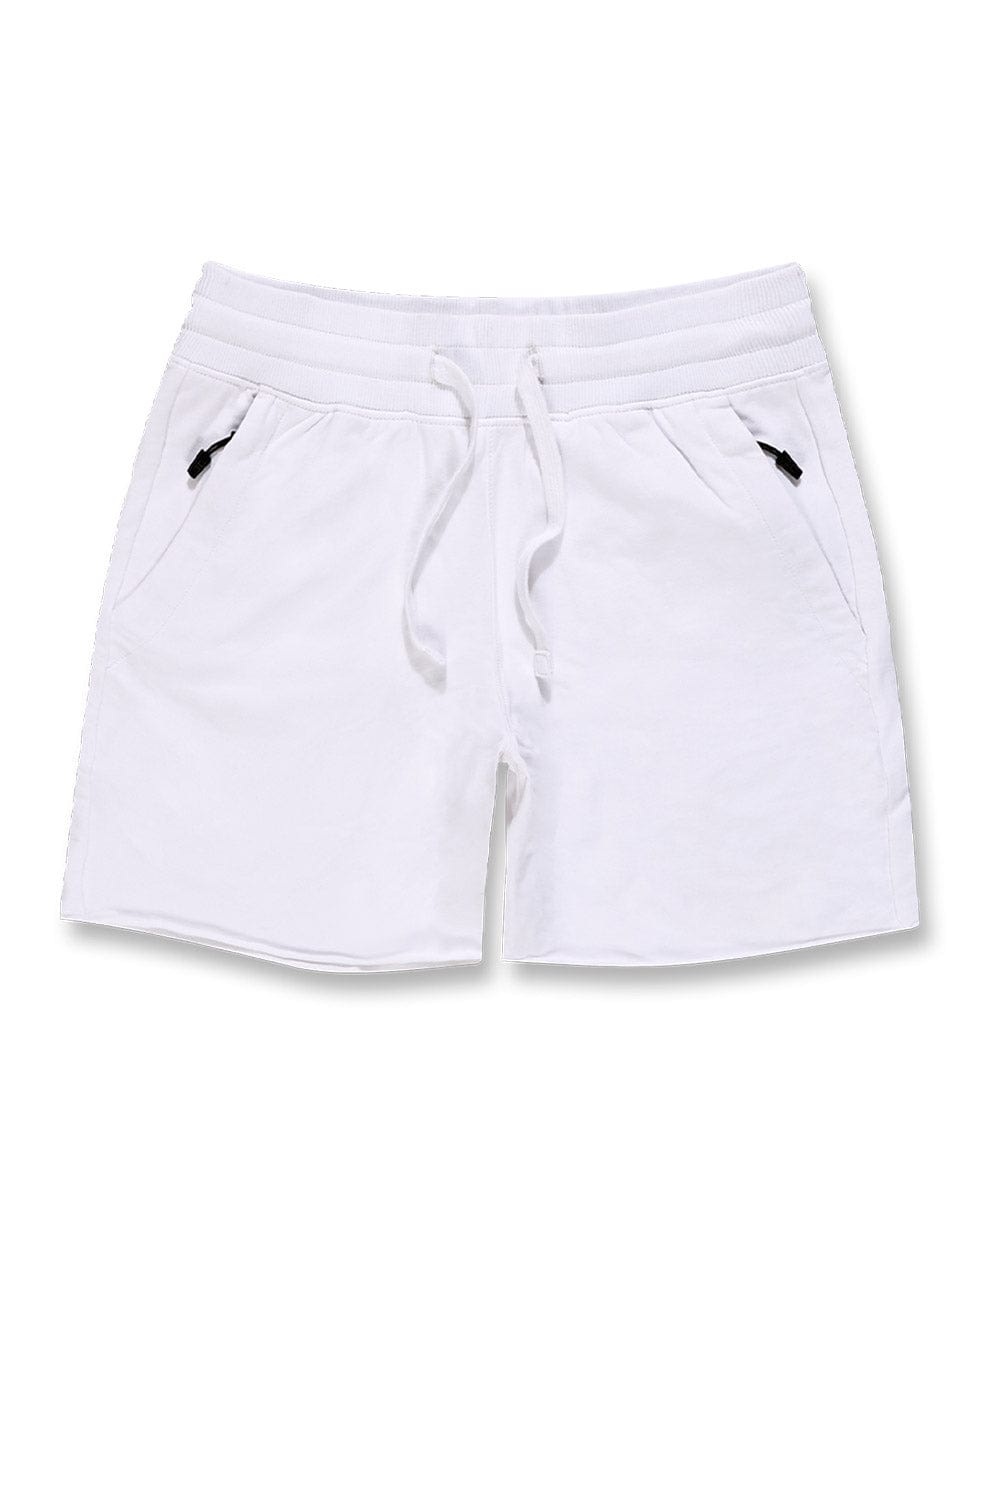 Jordan Craig Athletic - Summer Breeze Knit Shorts (Memorial Day Markdown) White / S